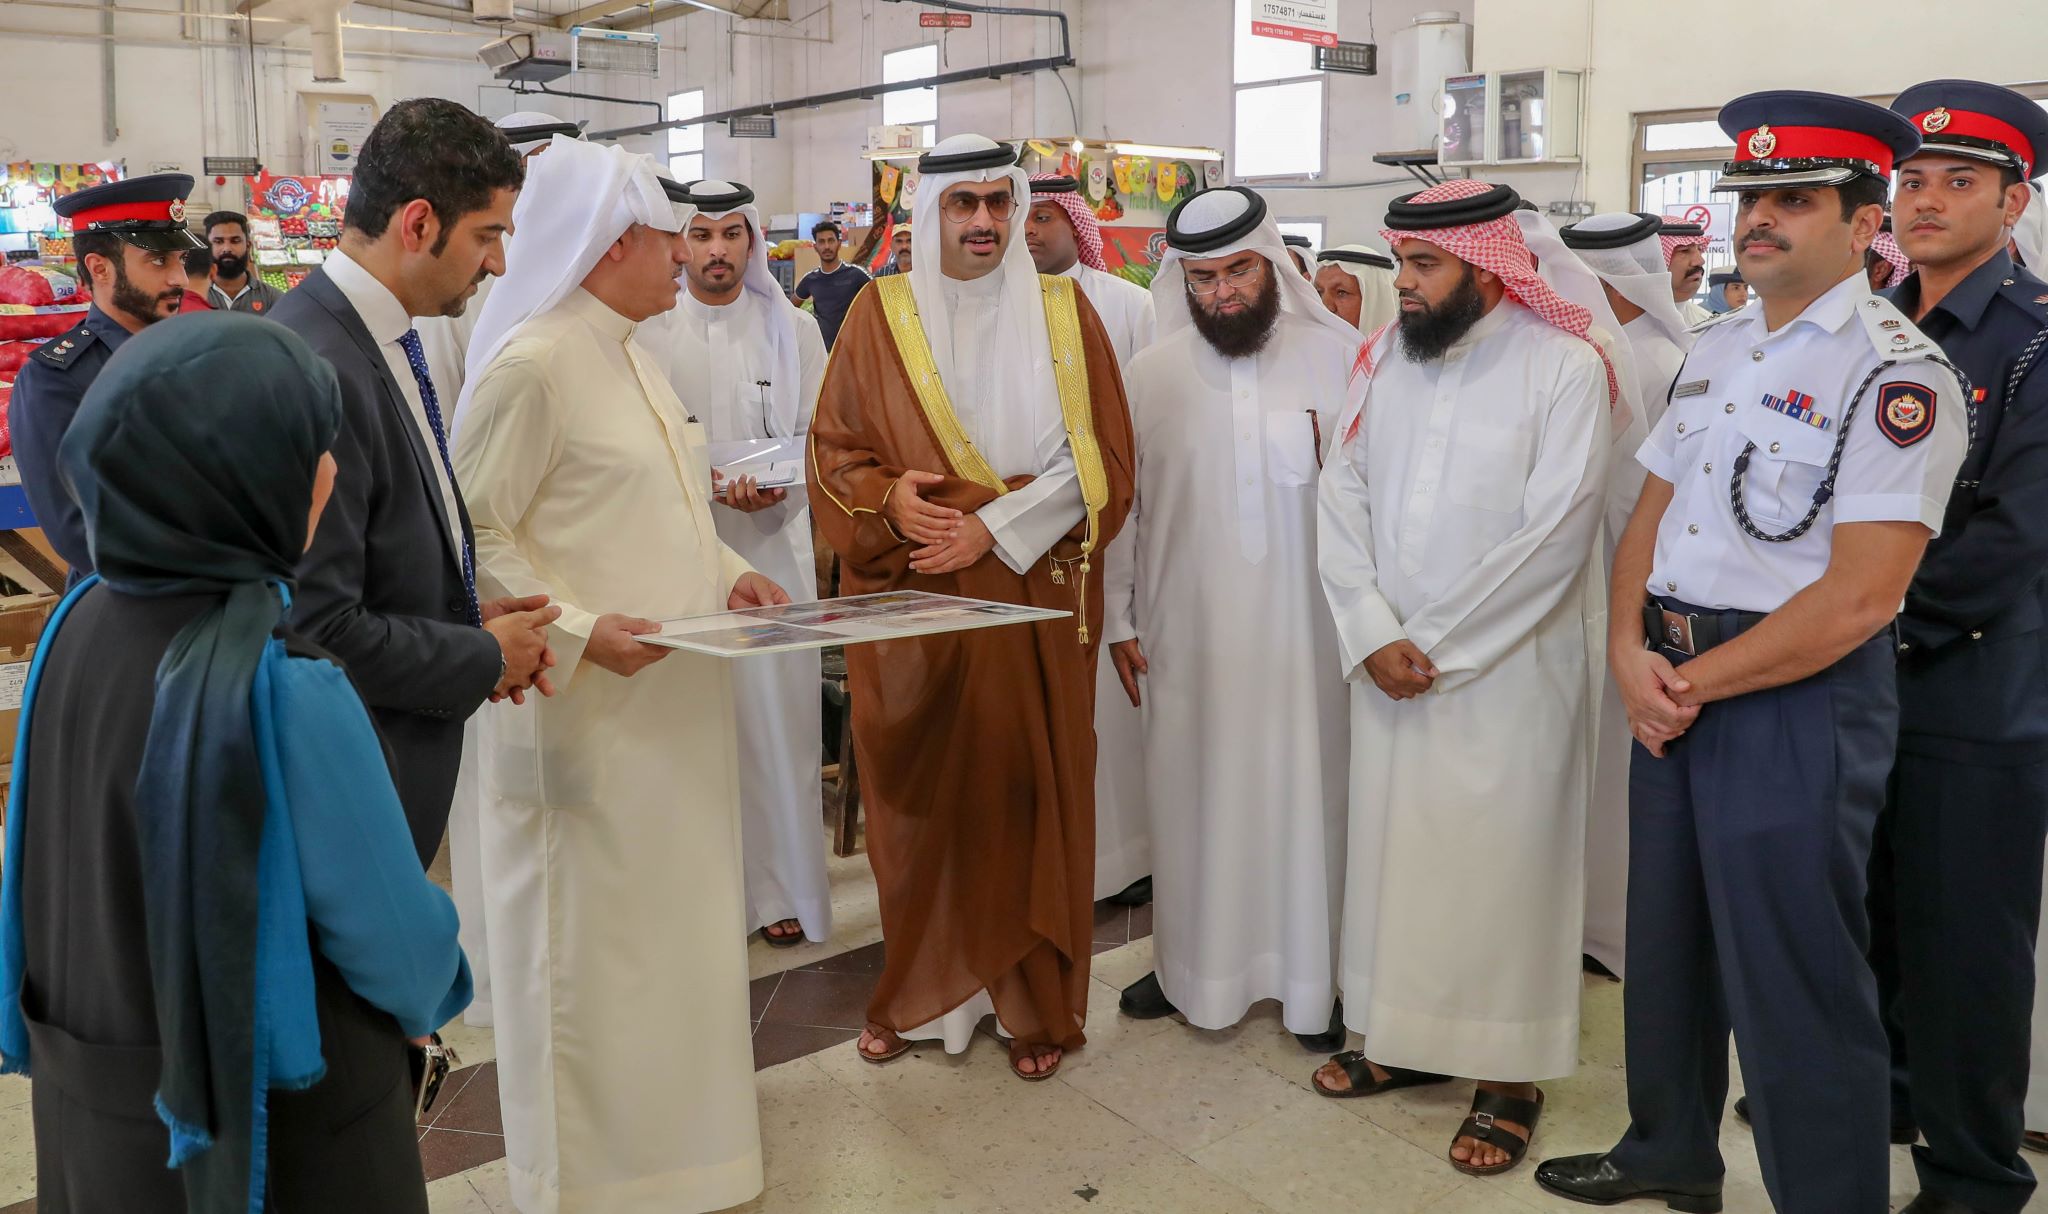 His Highness Shaikh Khalifa bin Ali bin Khalifa Al Khalifa, Governor of the Southern Governorate, visited the Eastern Riffa